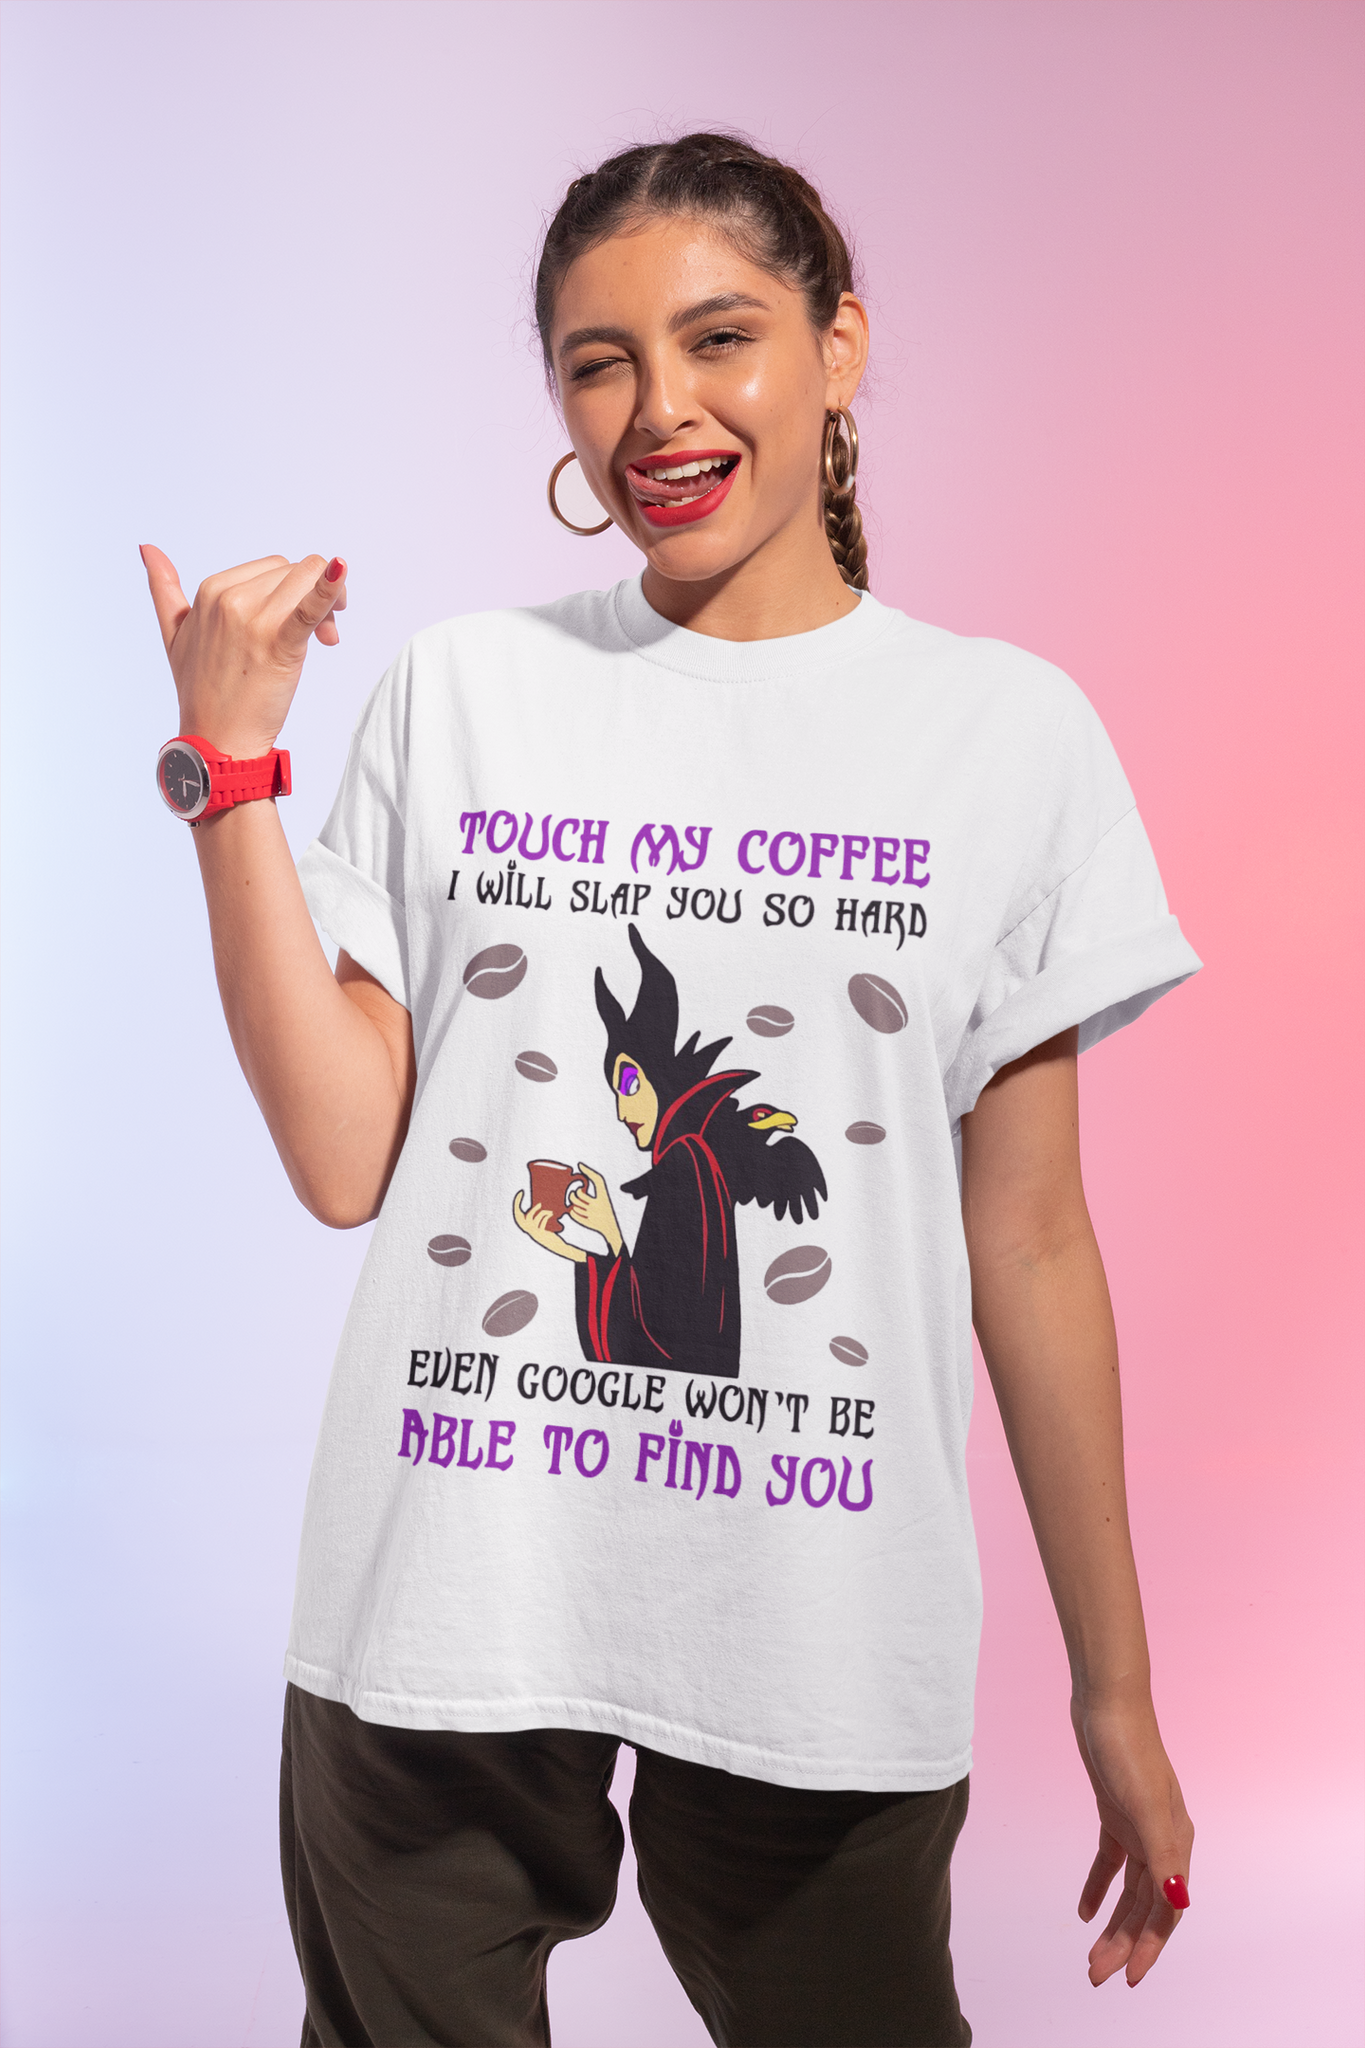 Disney Maleficent T Shirt, Disney Villains T Shirt, Diaval Maleficent Tshirt, Touch My Coffee I Will Slap You So Hard Shirt